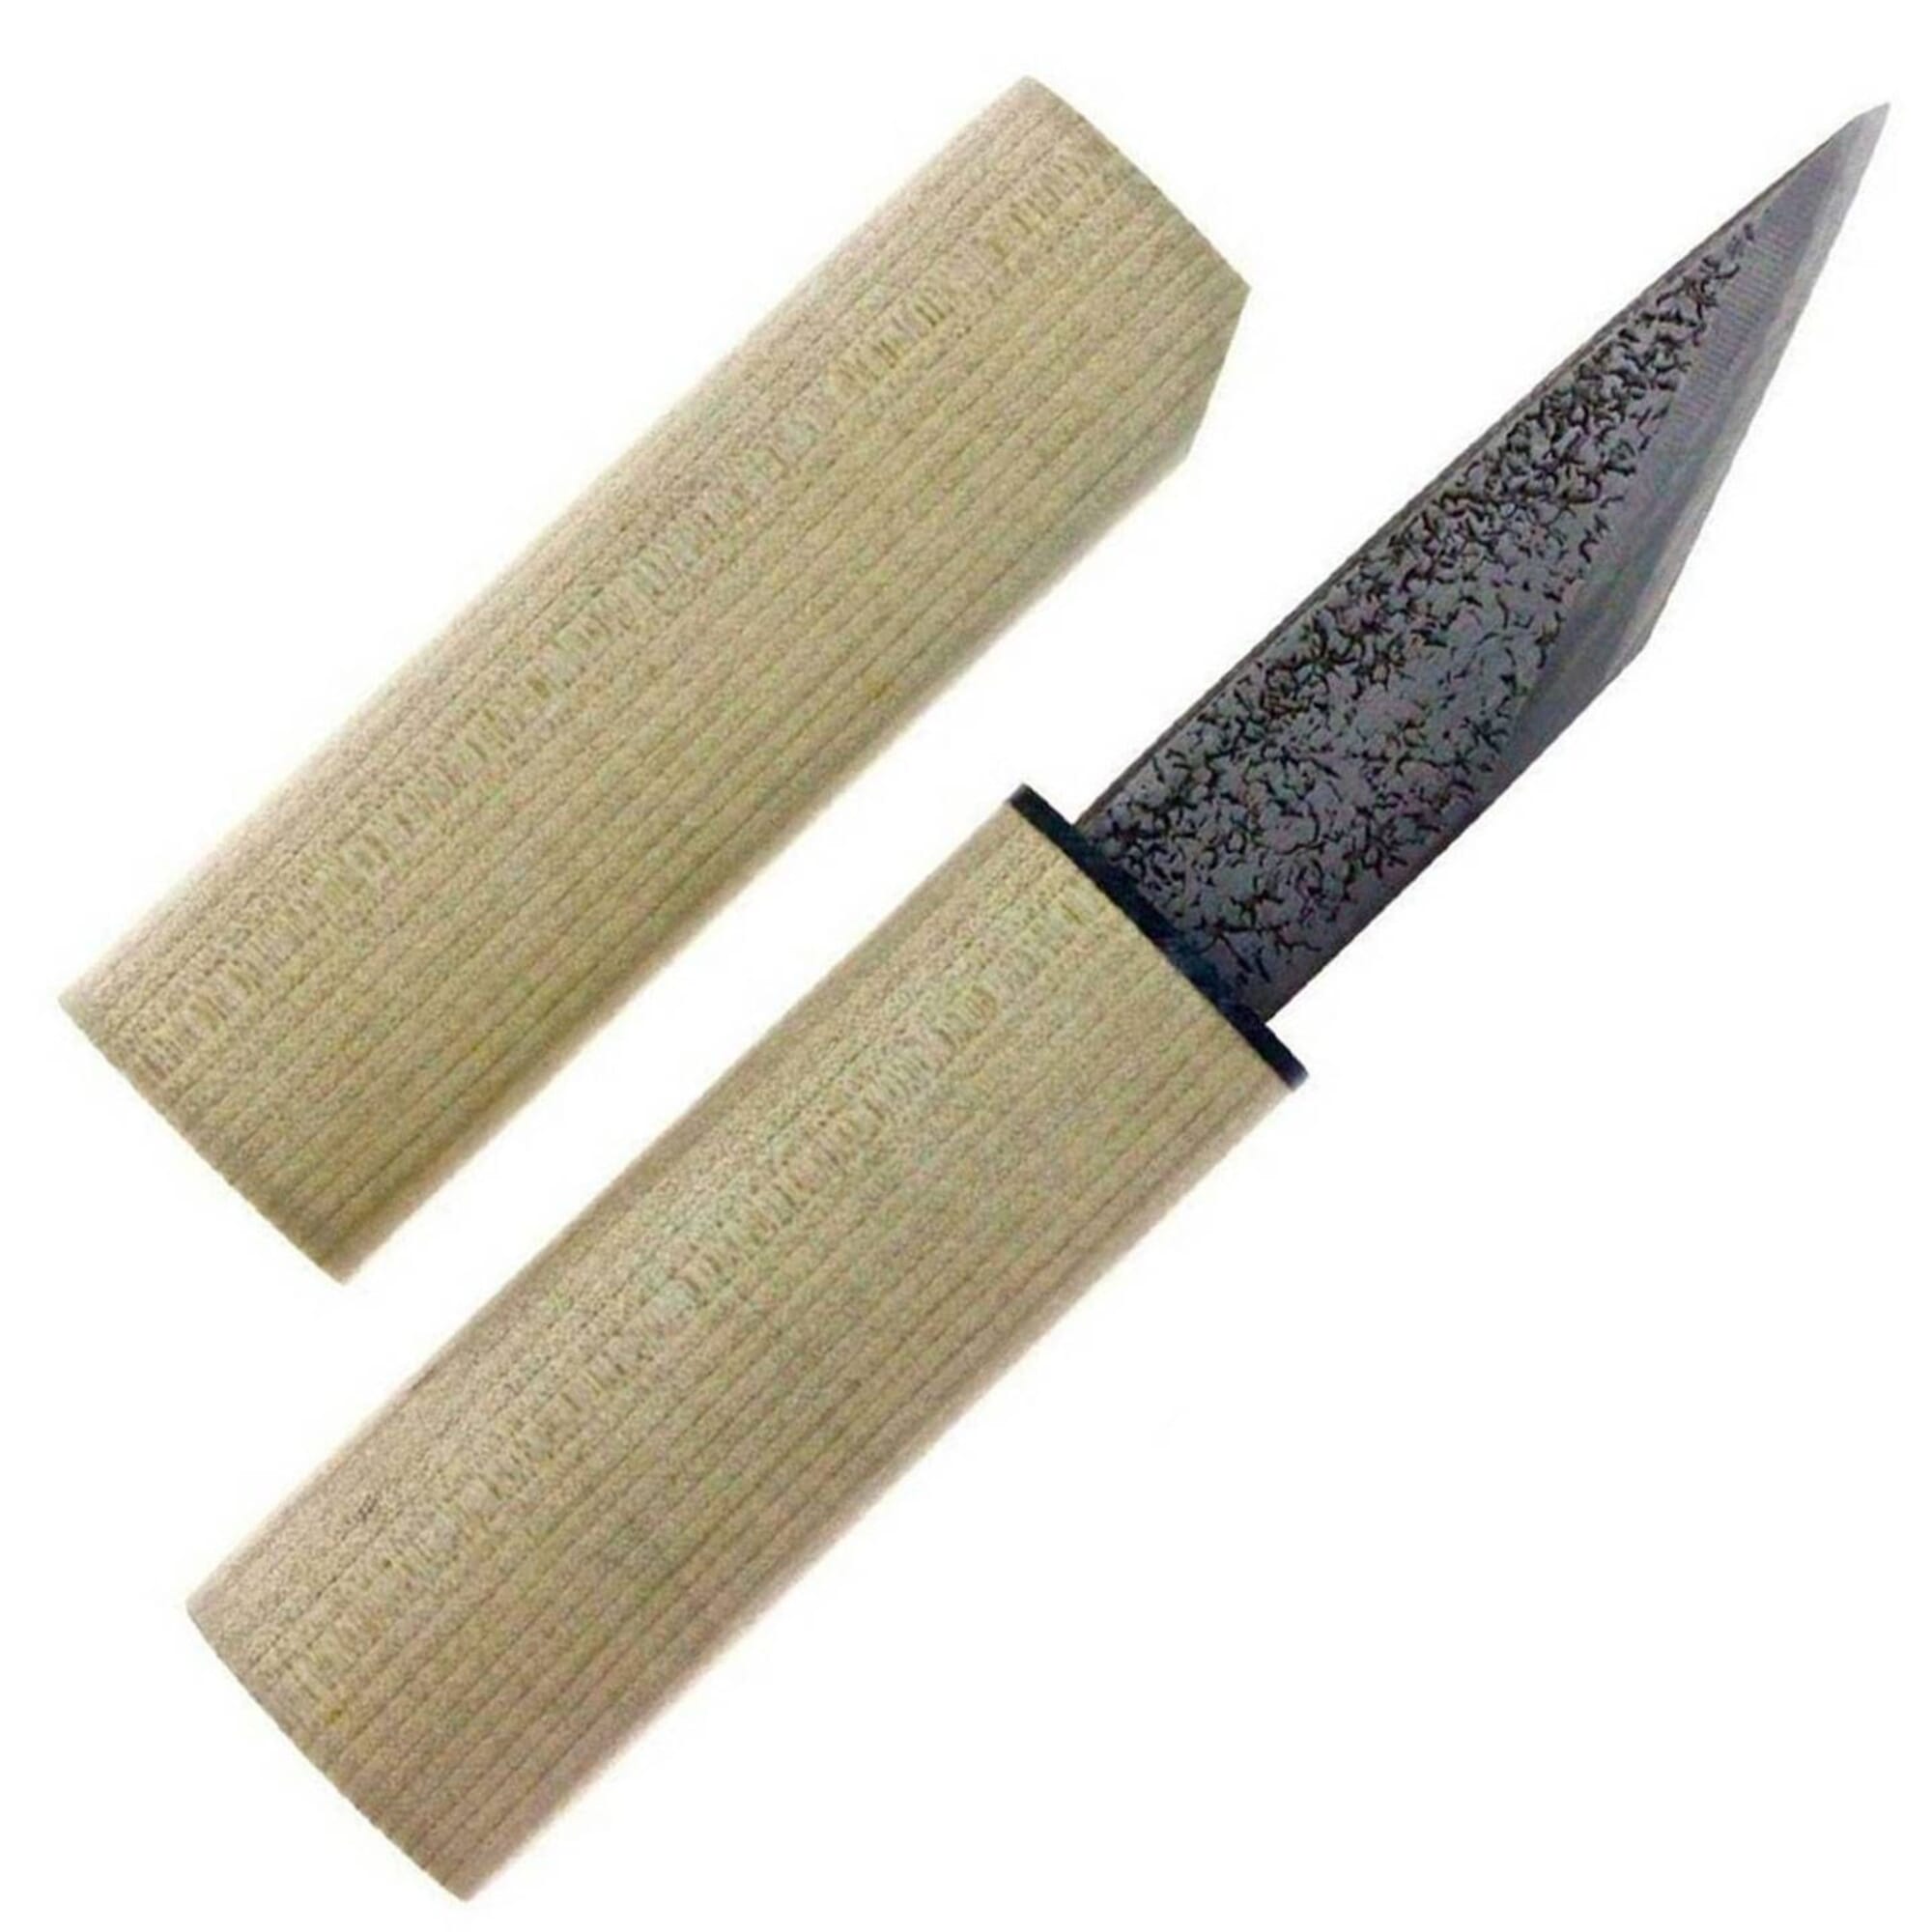  KAKURI Japanese Folding Knife 2.3, Made in JAPAN